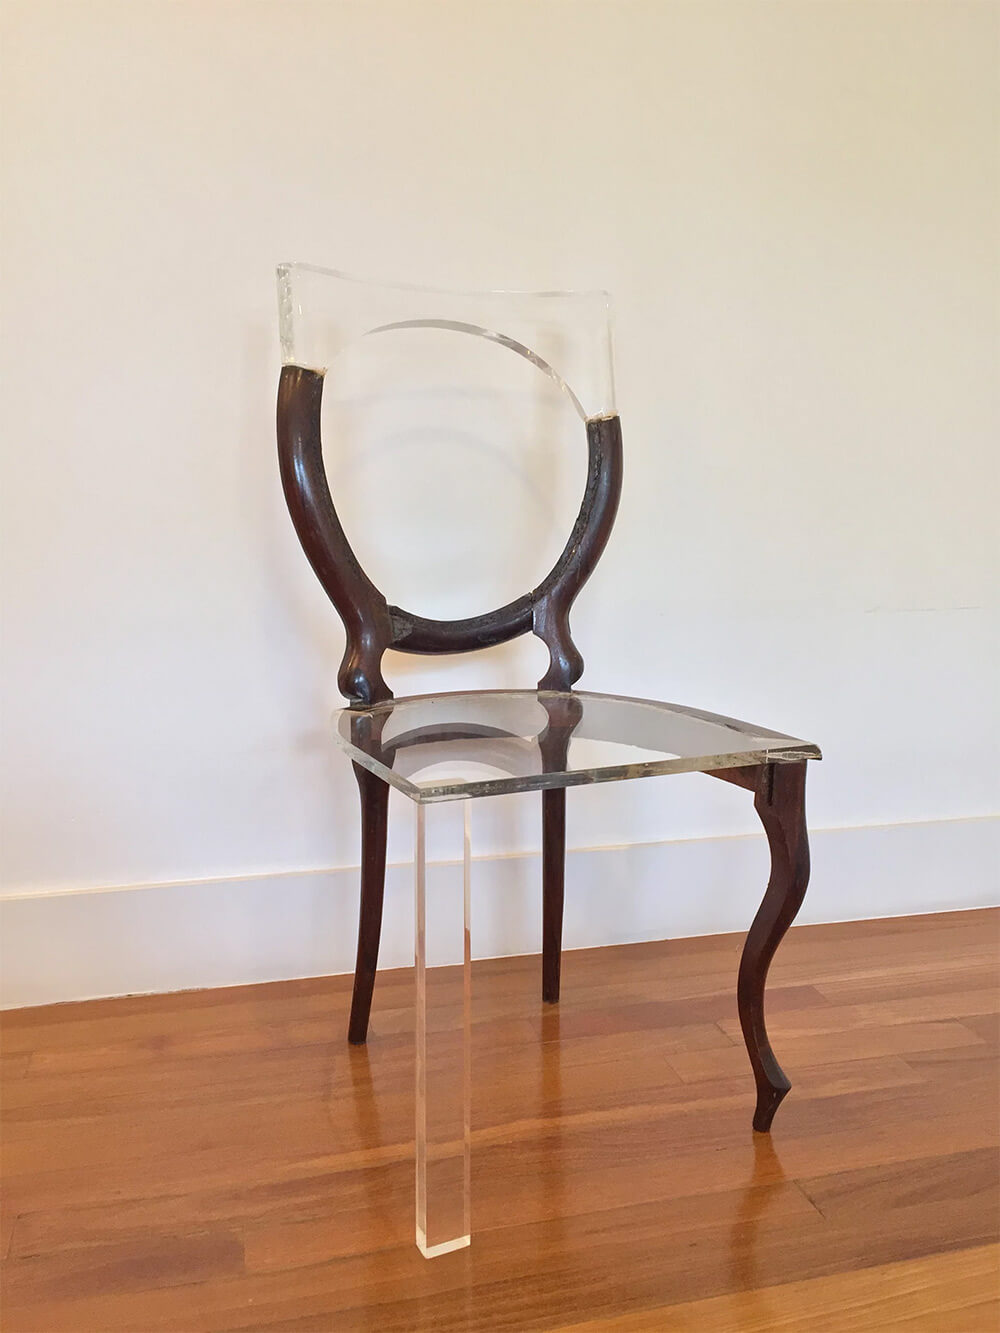 Artist Repairs Broken Wooden Furniture By Using Modern Translucent Materials